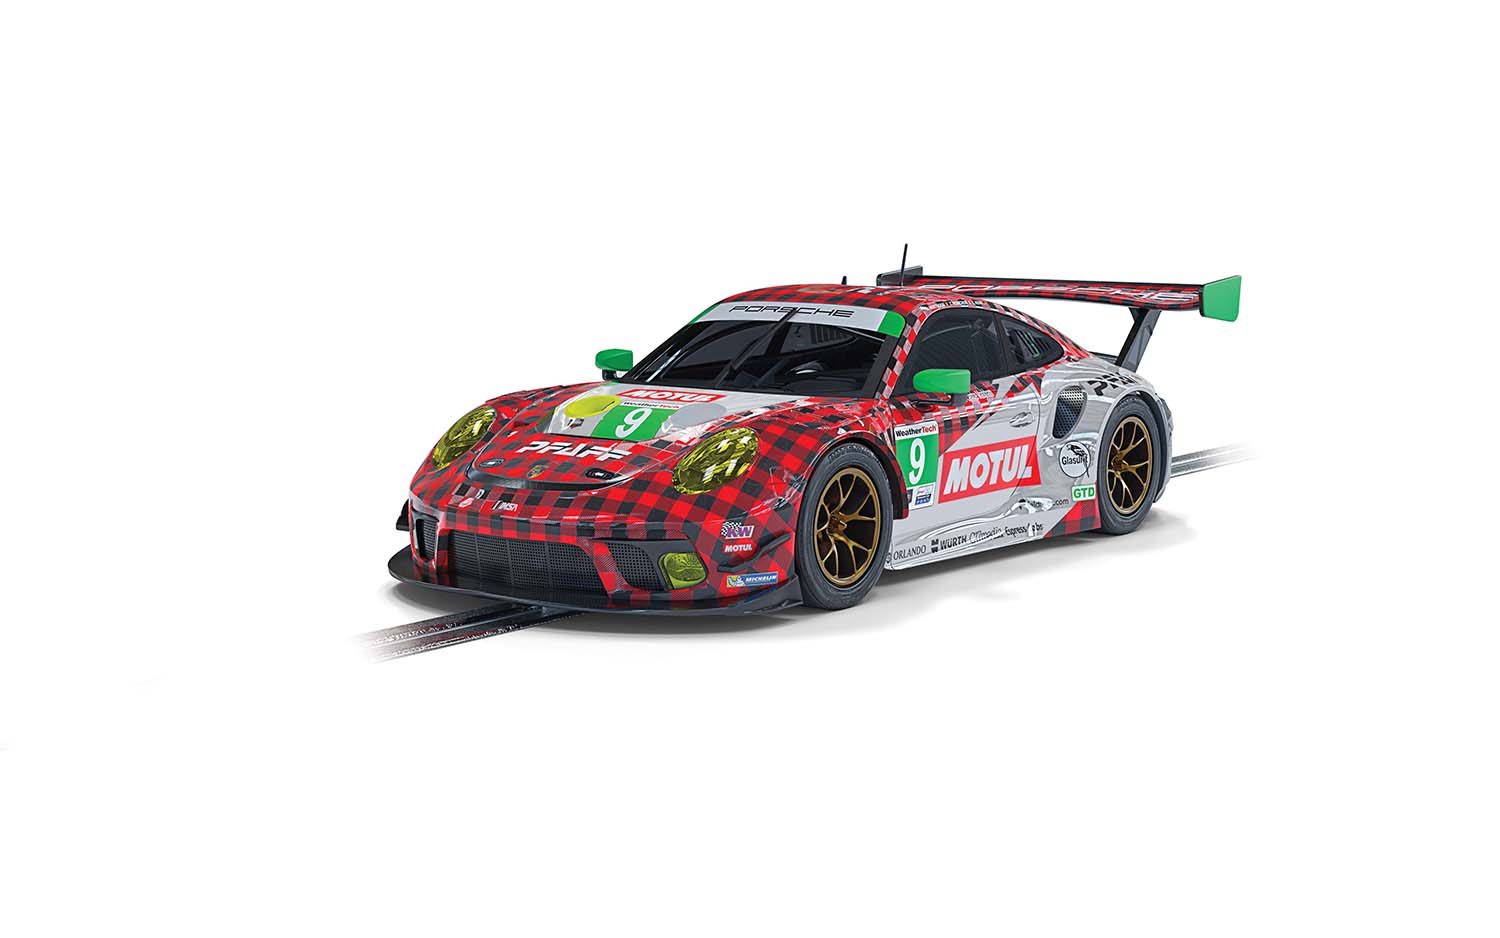 Porsche 911 GT3 R -  Sebring 12 hours 2021 - Pfaff Racing